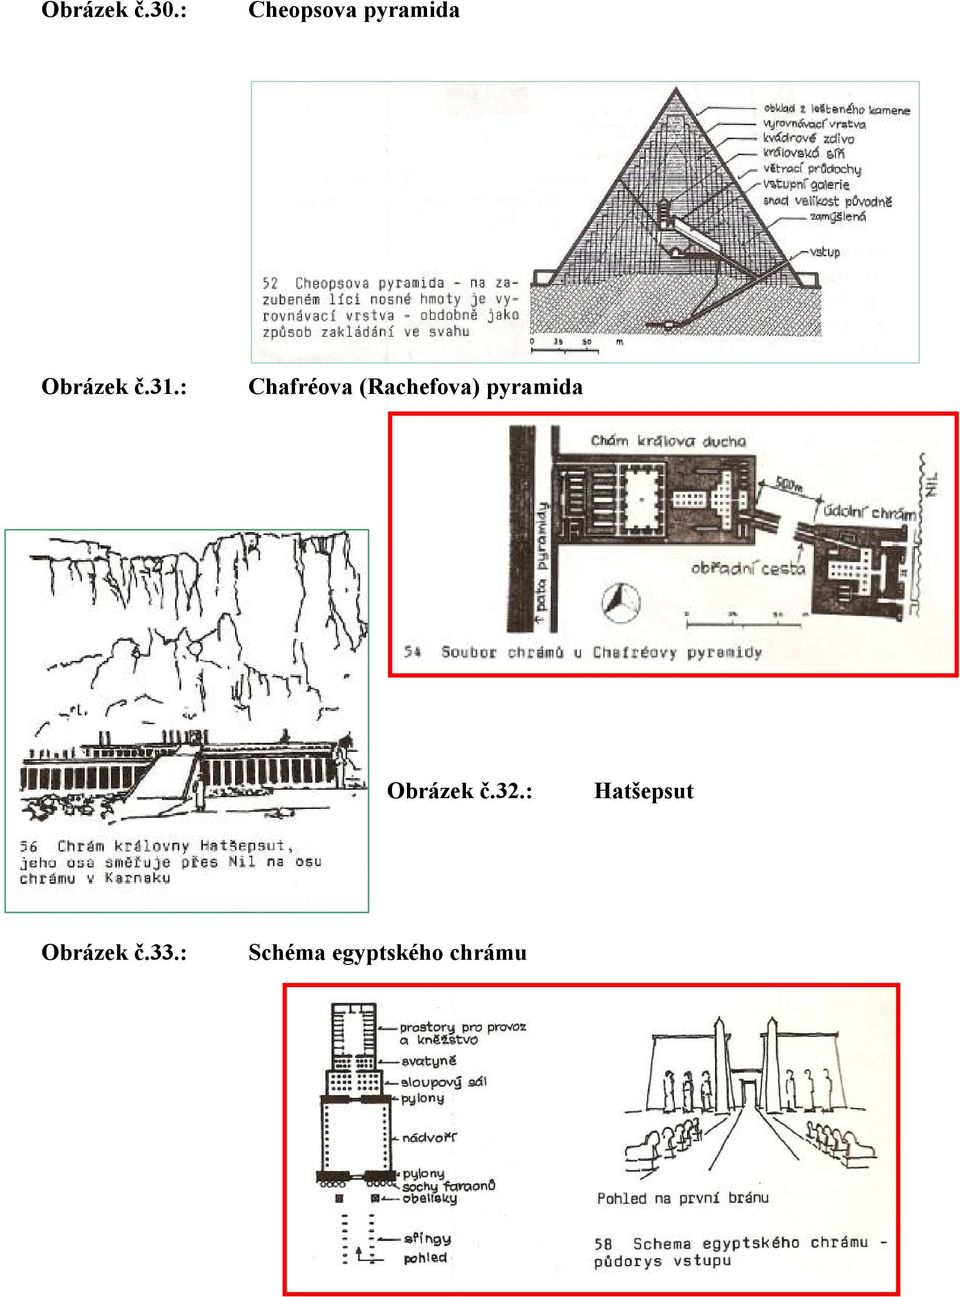 : Chafréova (Rachefova) pyramida